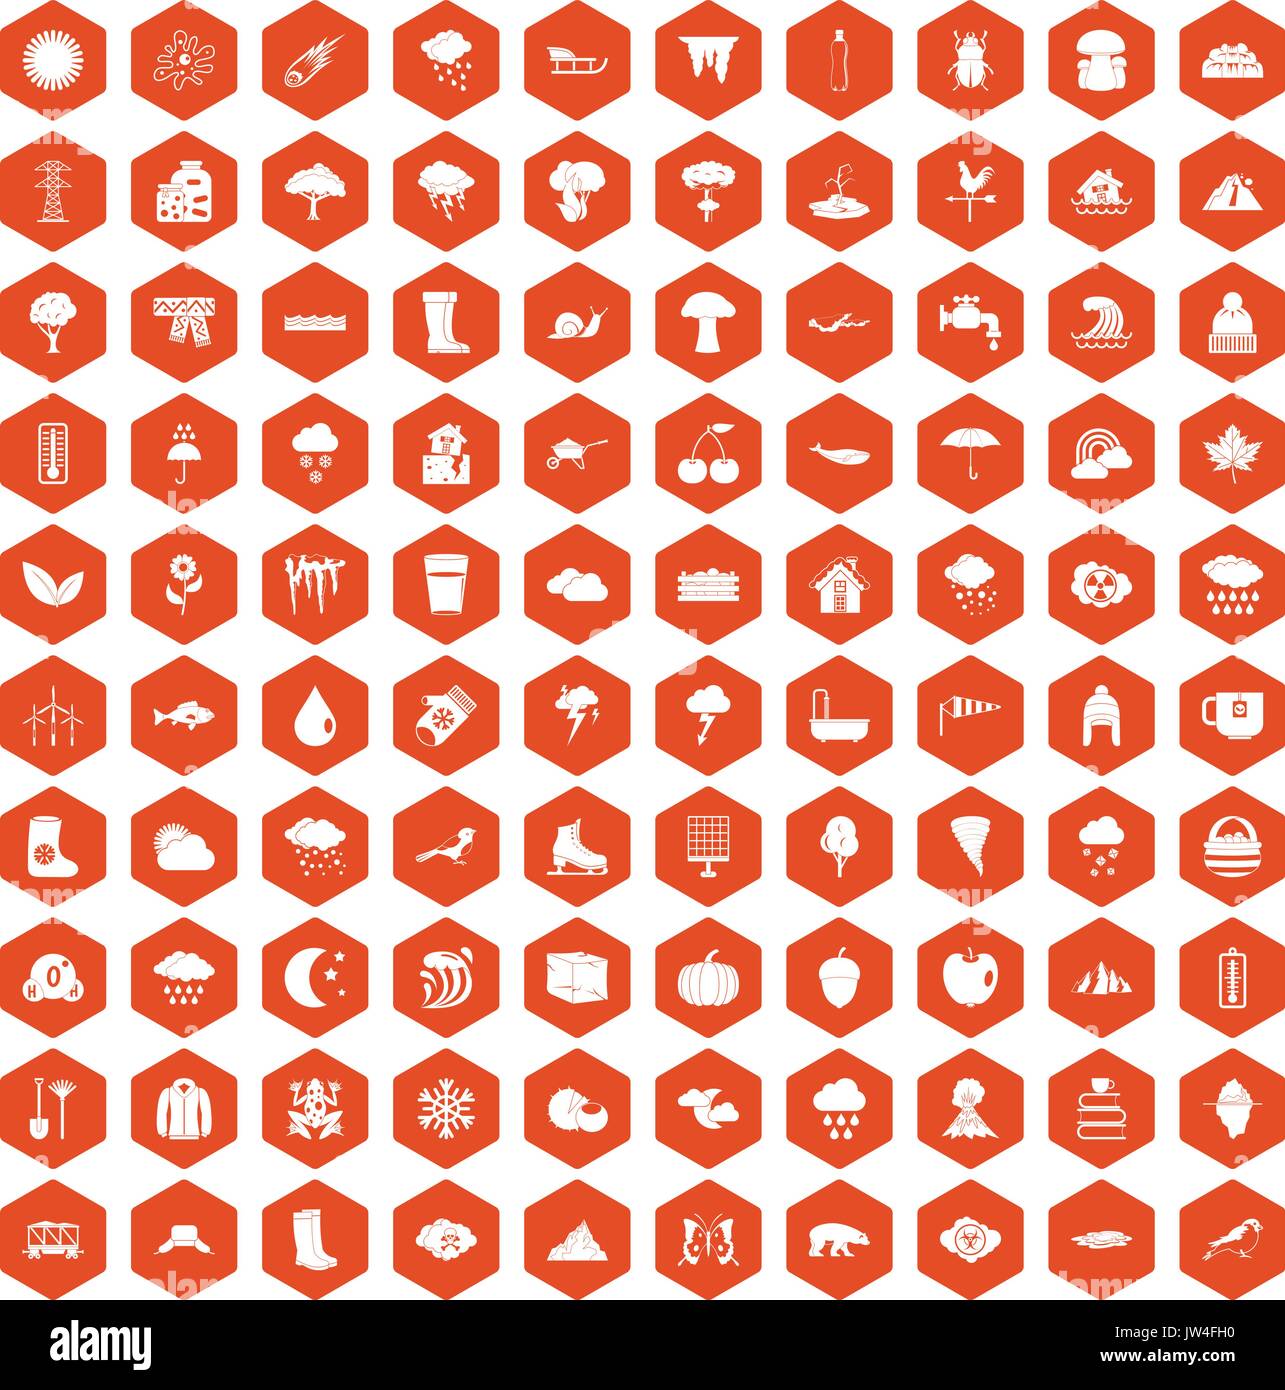 100 clouds icons hexagon orange Stock Vector